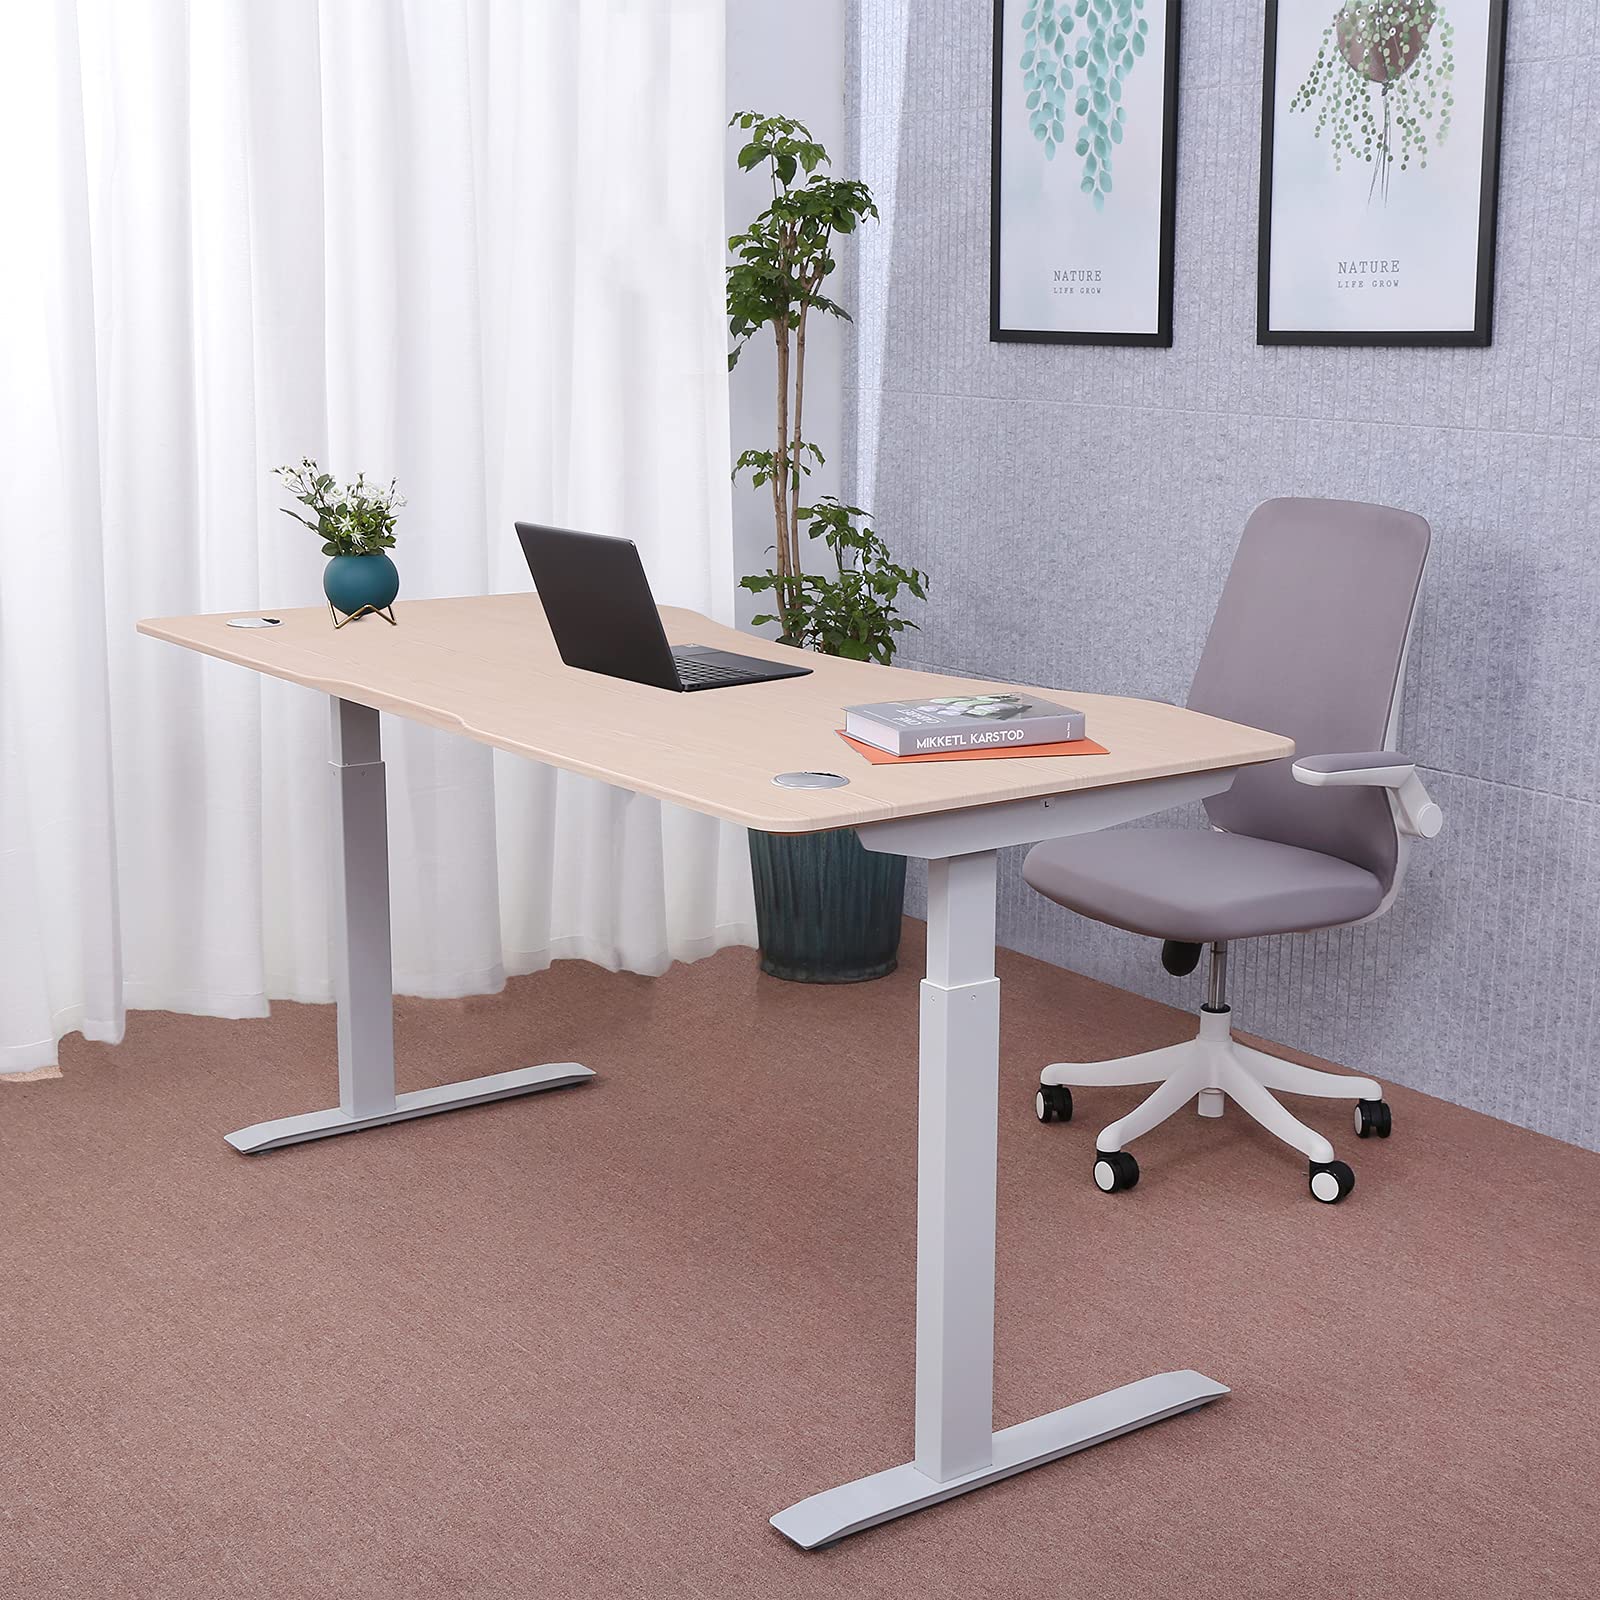 ApexDesk Elite Pro Series 60" Electric Height Adjustable Stand up Desk, Sit Stand Home Office Desk, Computer Desk - Curved Oak